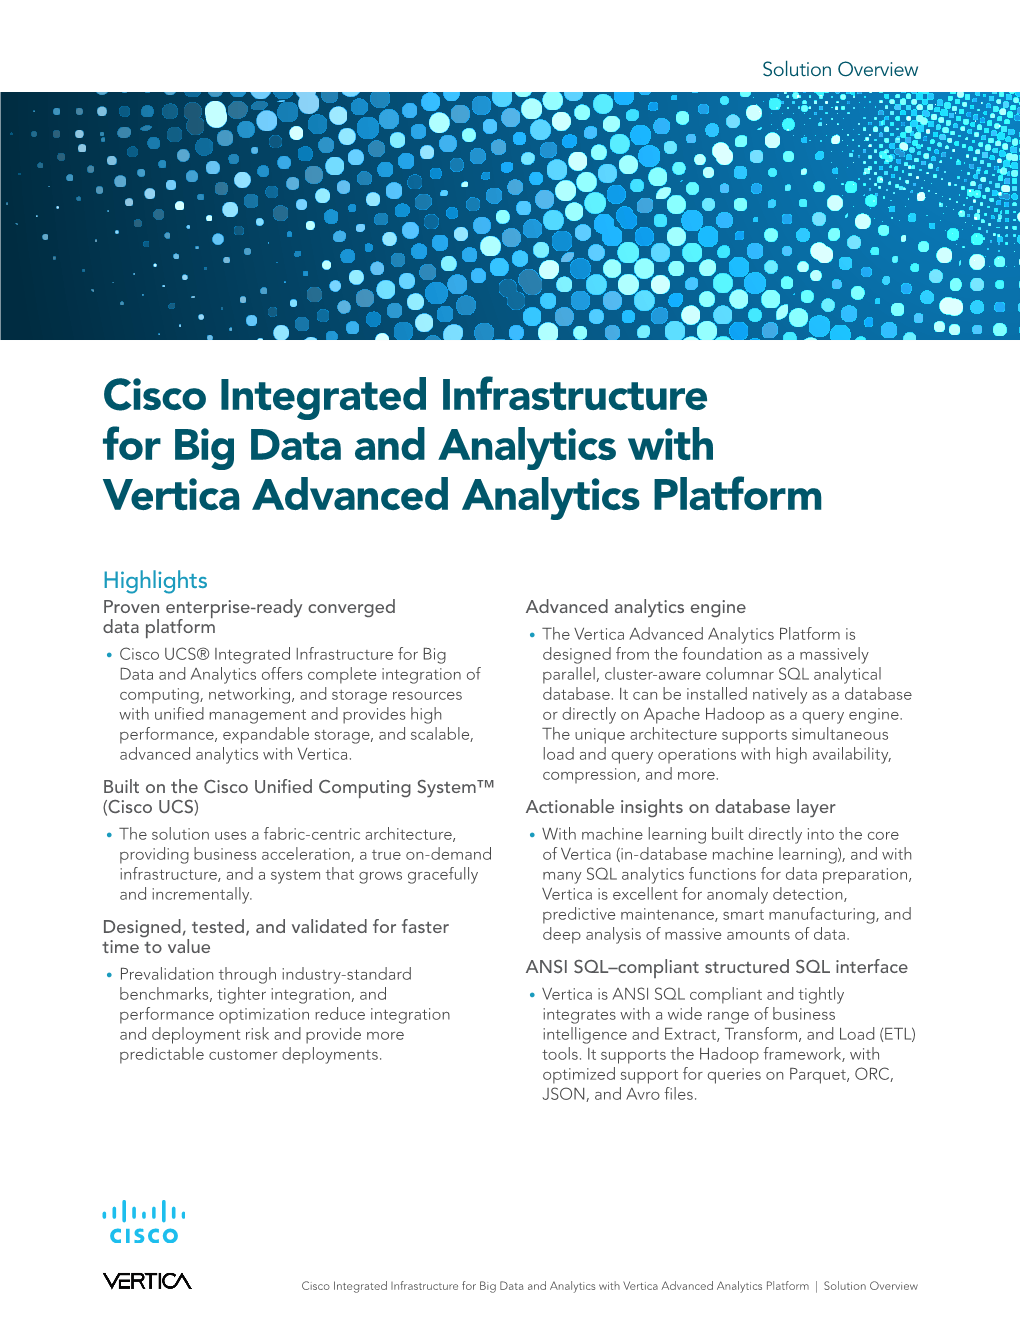 Cisco Integrated Infrastructure for Big Data and Analytics with Vertica Advanced Analytics Platform